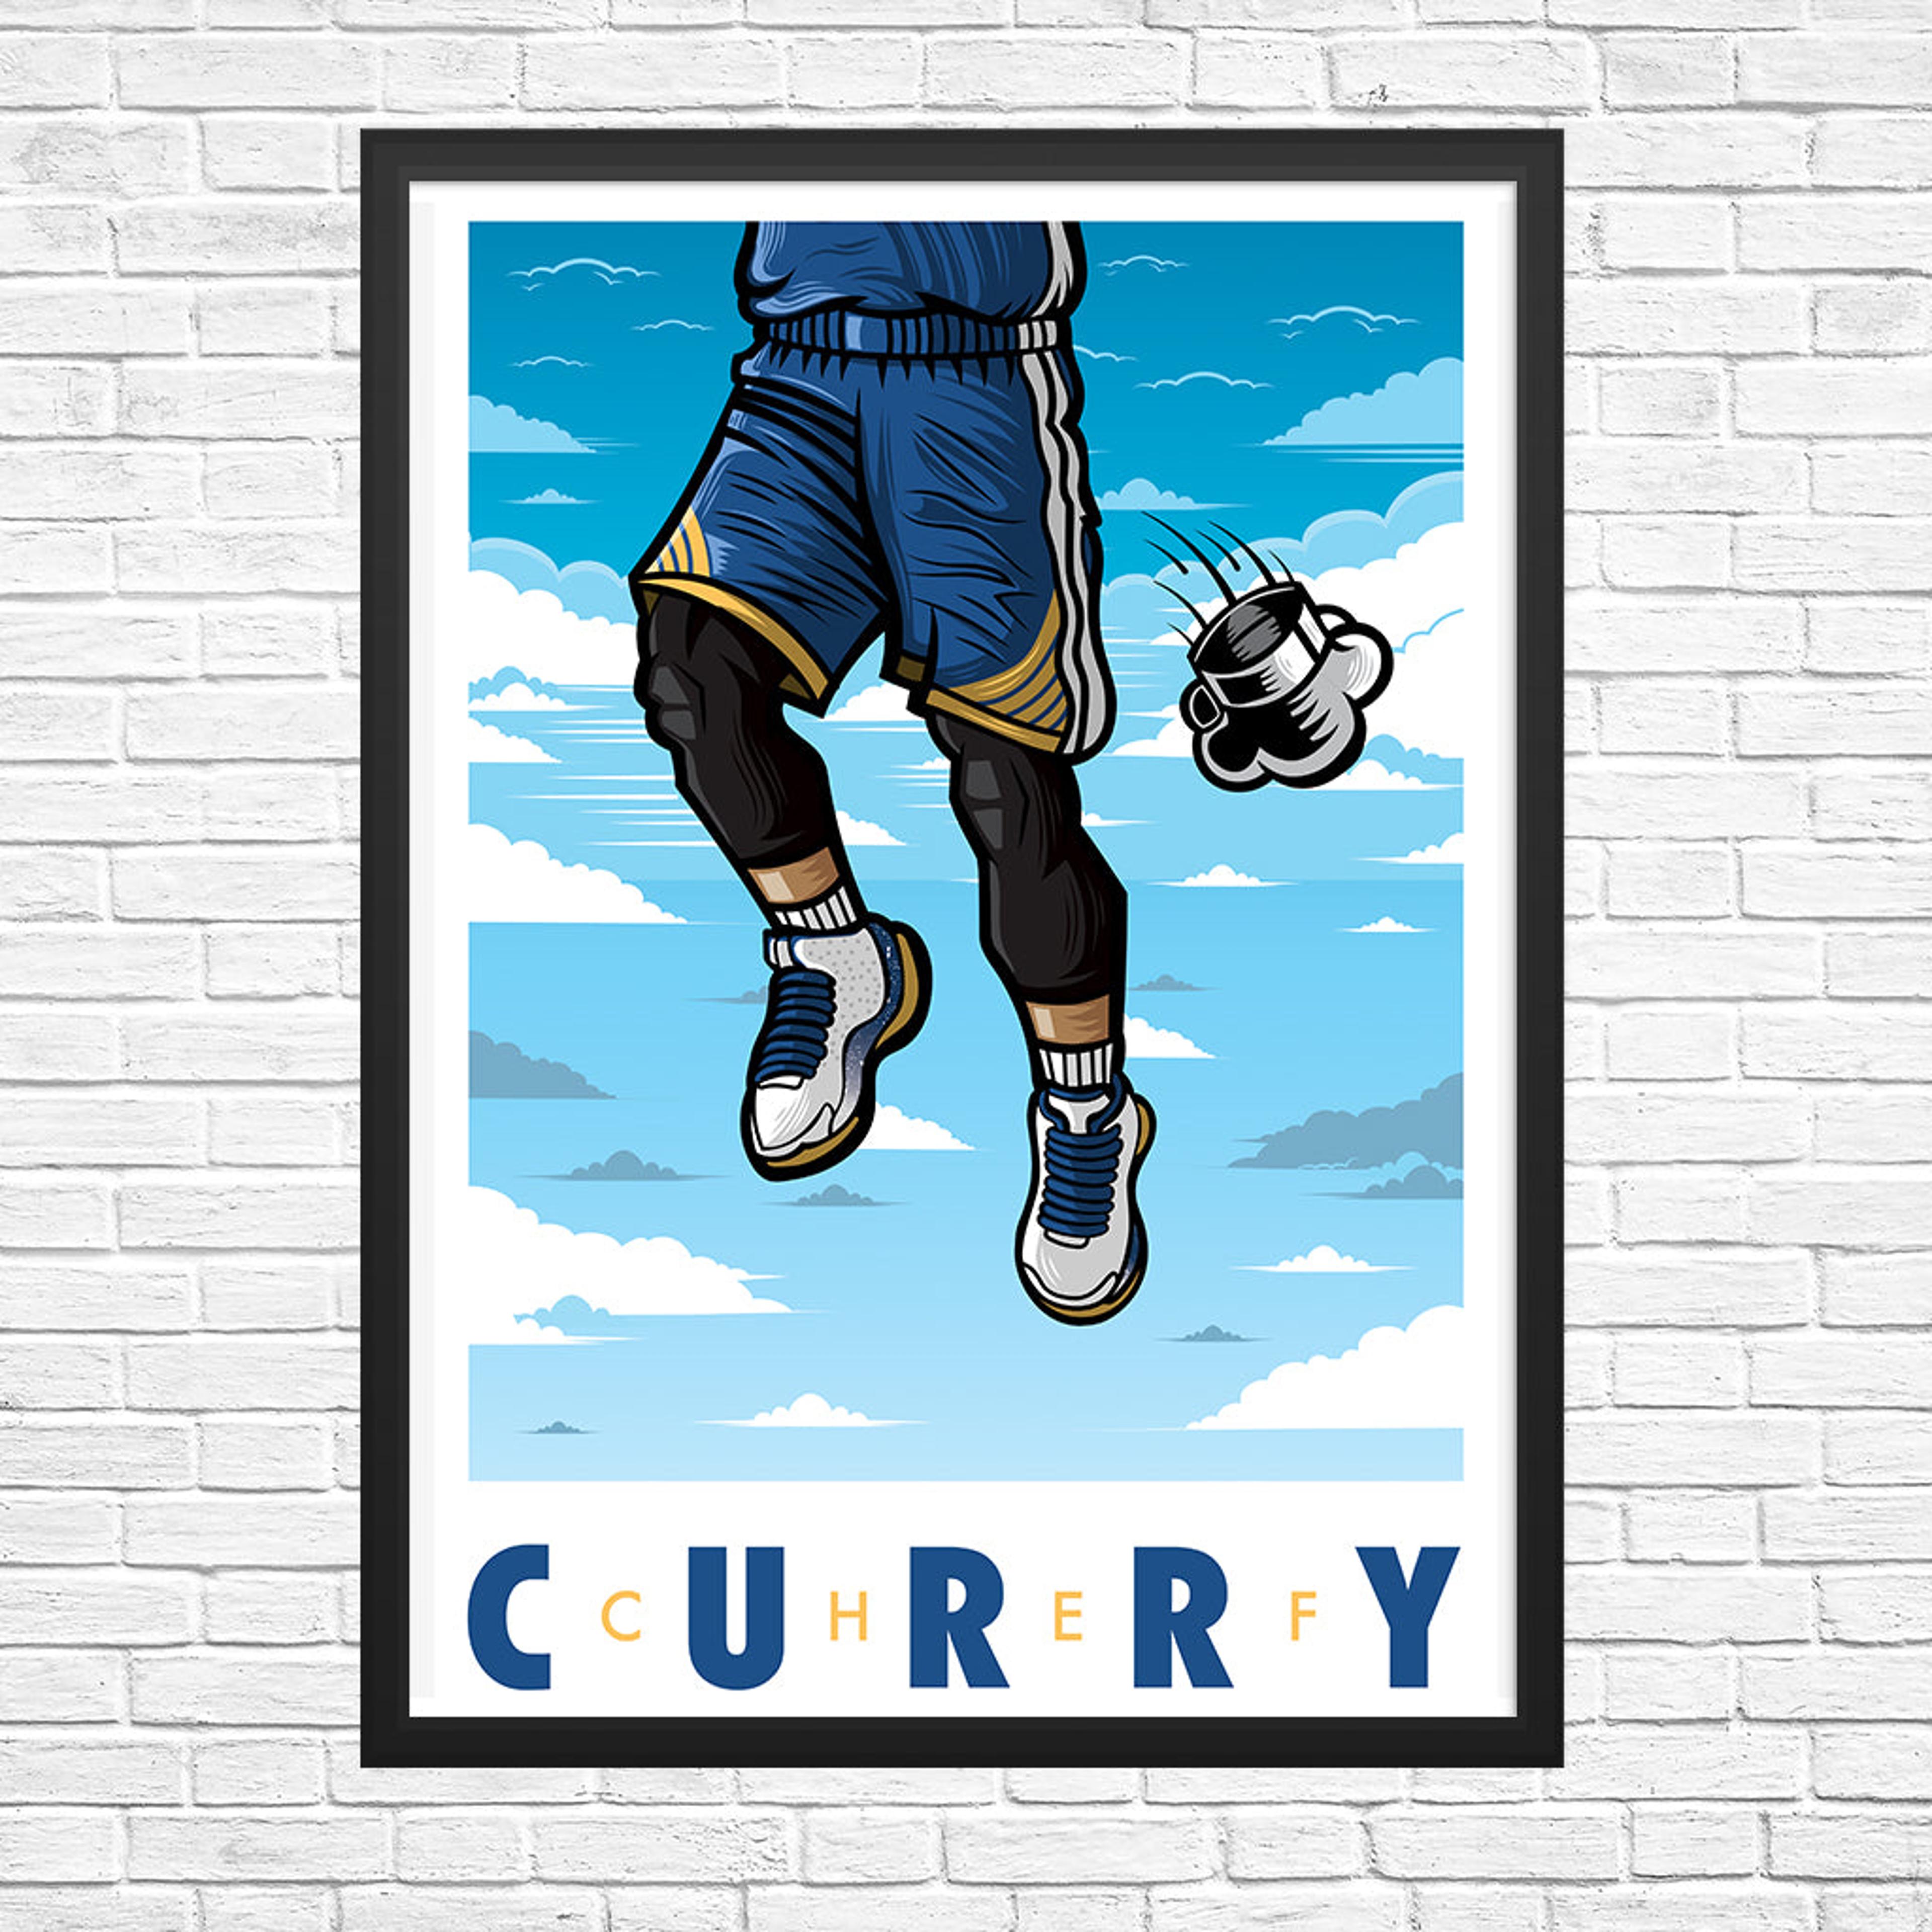 Chef Curry Giclee Art Print 13 x 19